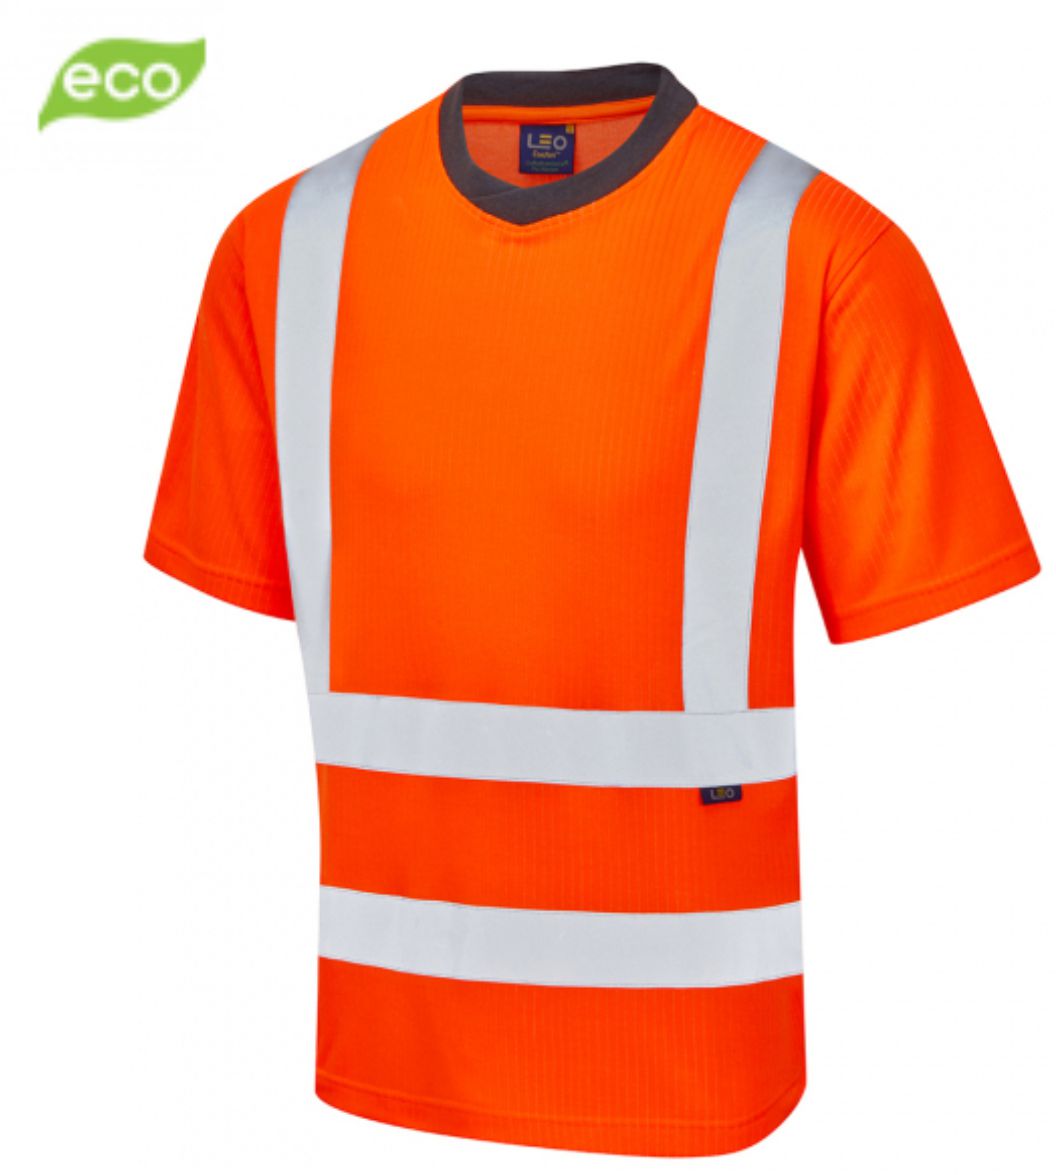 Leo Newport ISO 20471 Class 2 Comfort EcoViz®PB T-Shirt